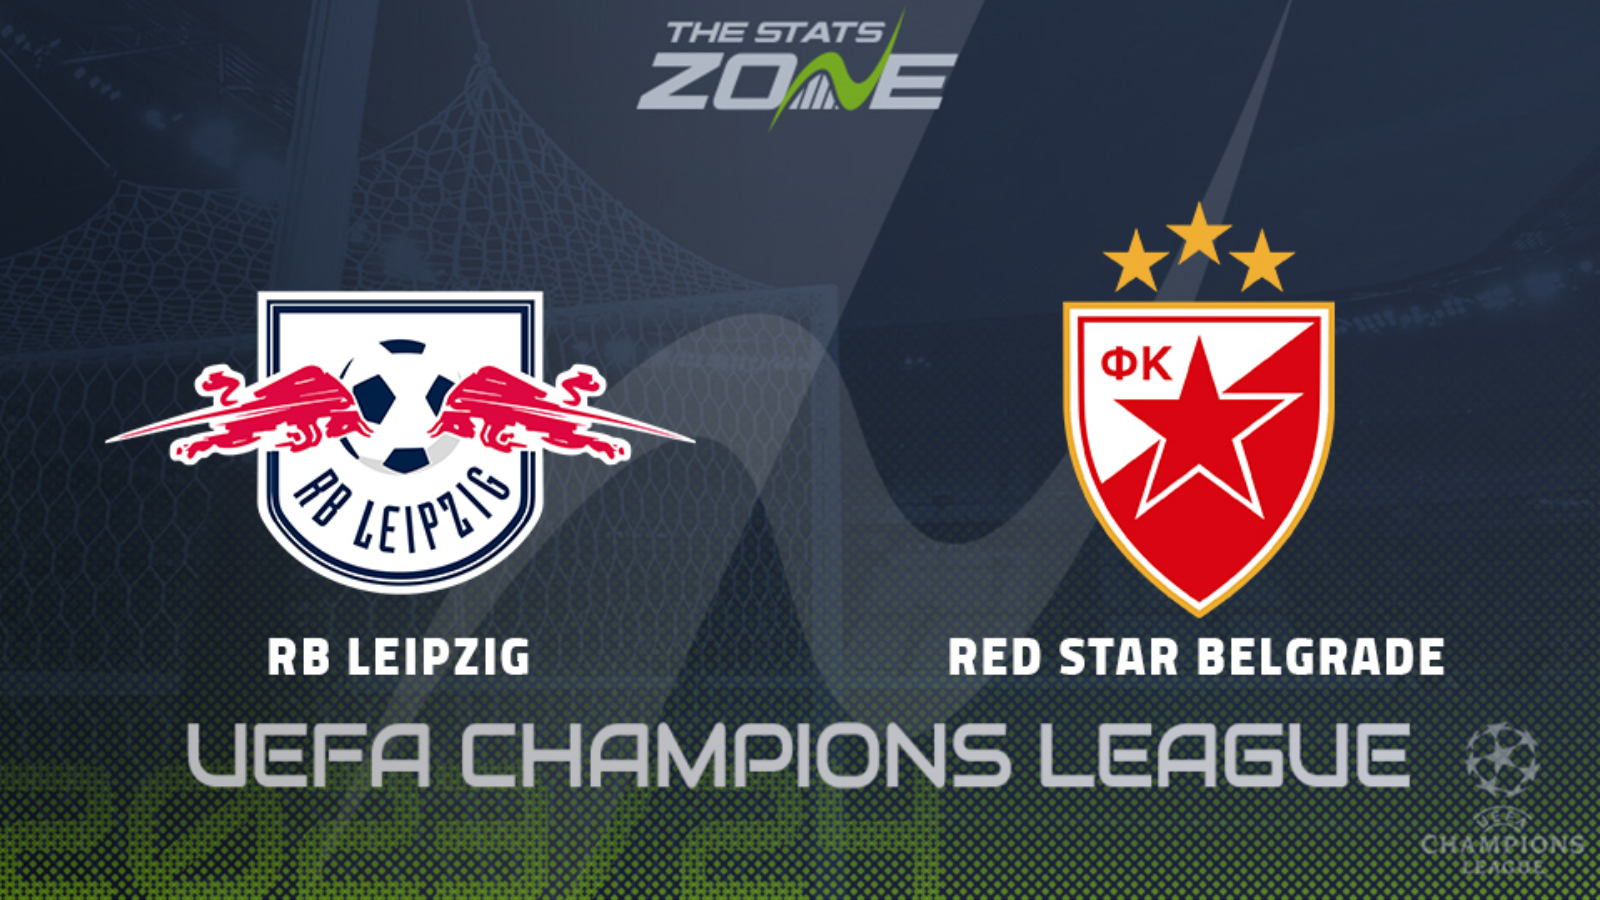 RB Leipzig vs Crvena Zvezda - UEFA Champions League